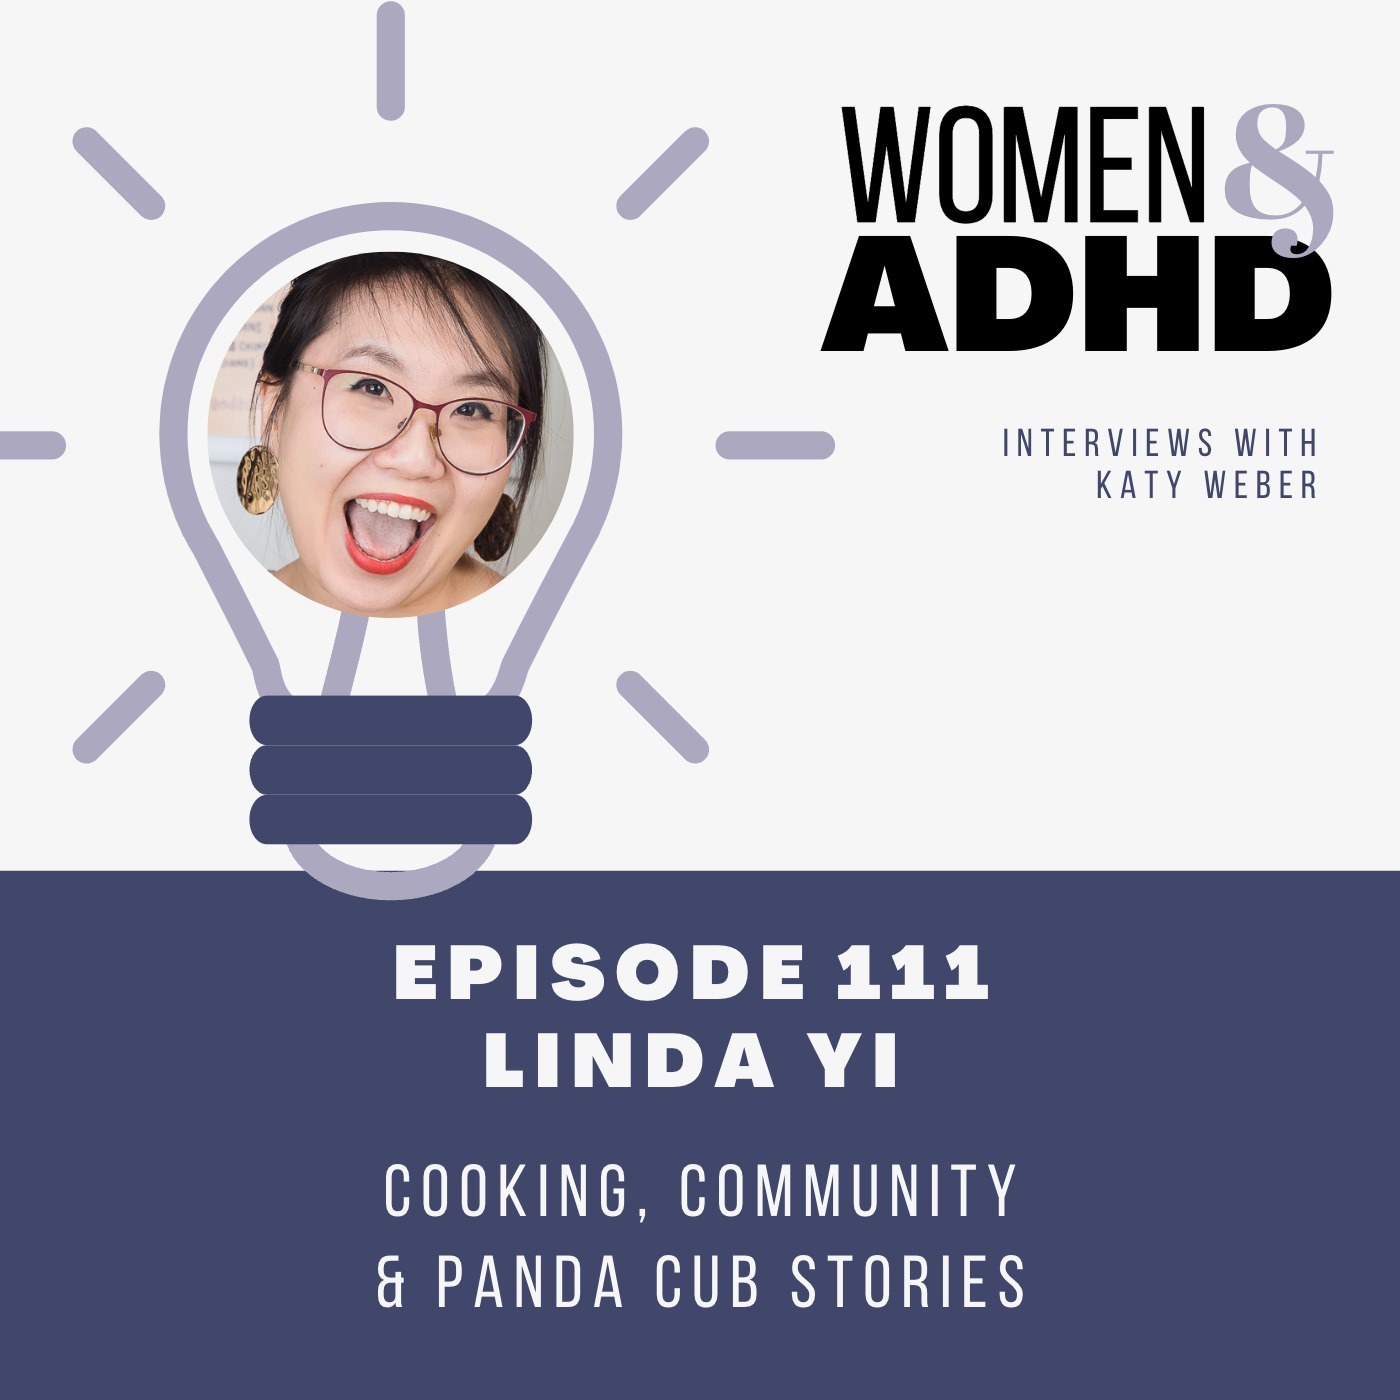 Linda Yi: Cooking, community, and panda cub stories